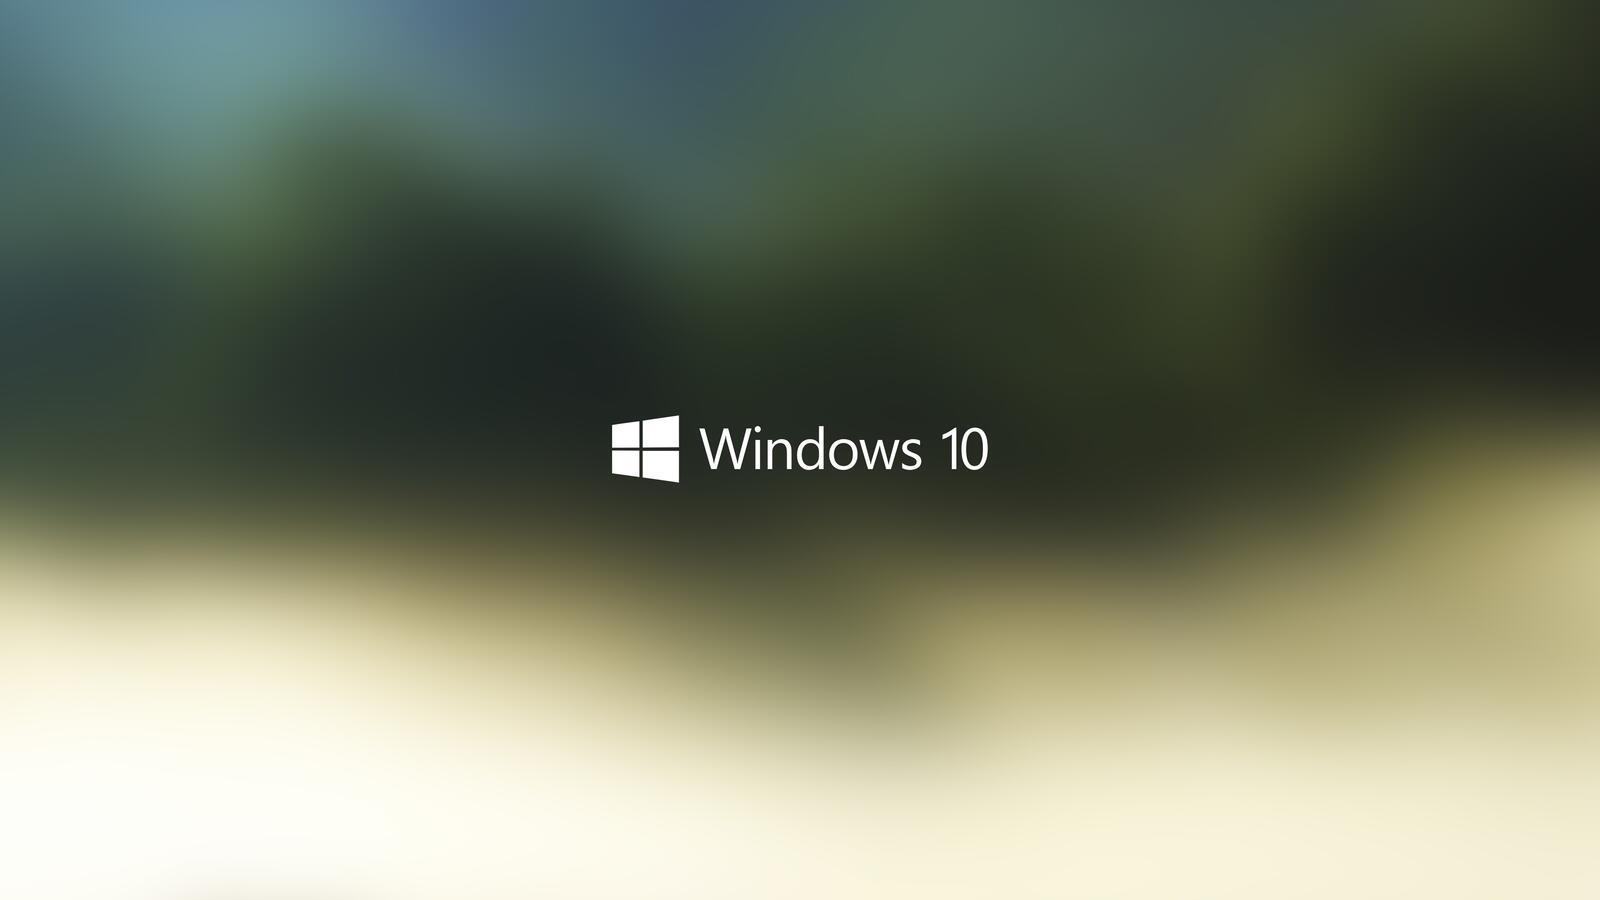 Free photo Windows 10 logo on a plain background